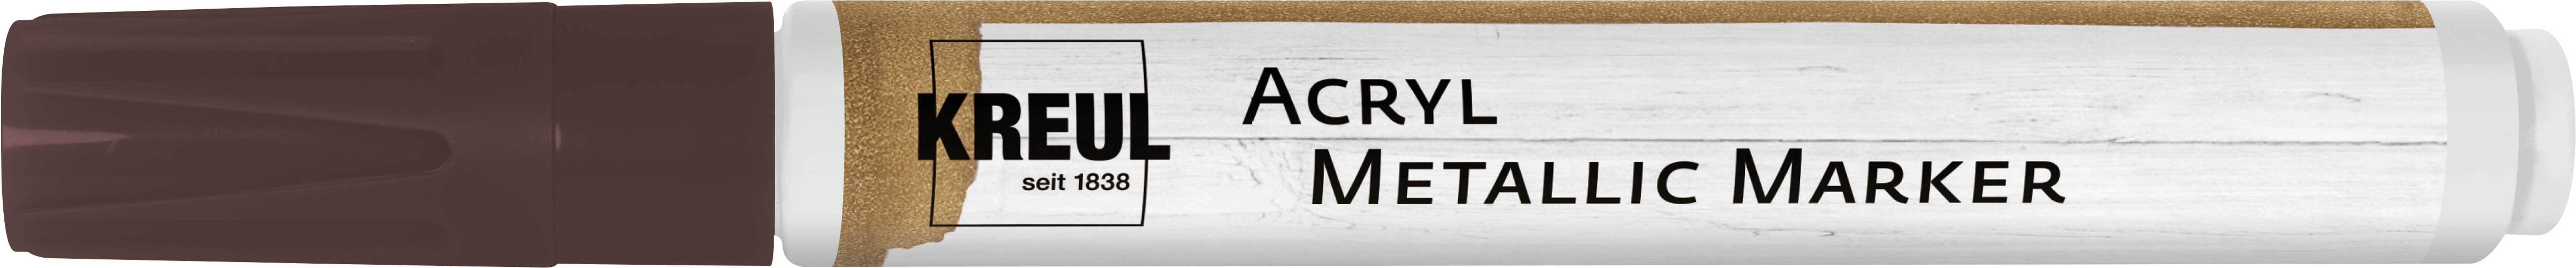 Acryl Metallic Marker - medium, kupfer